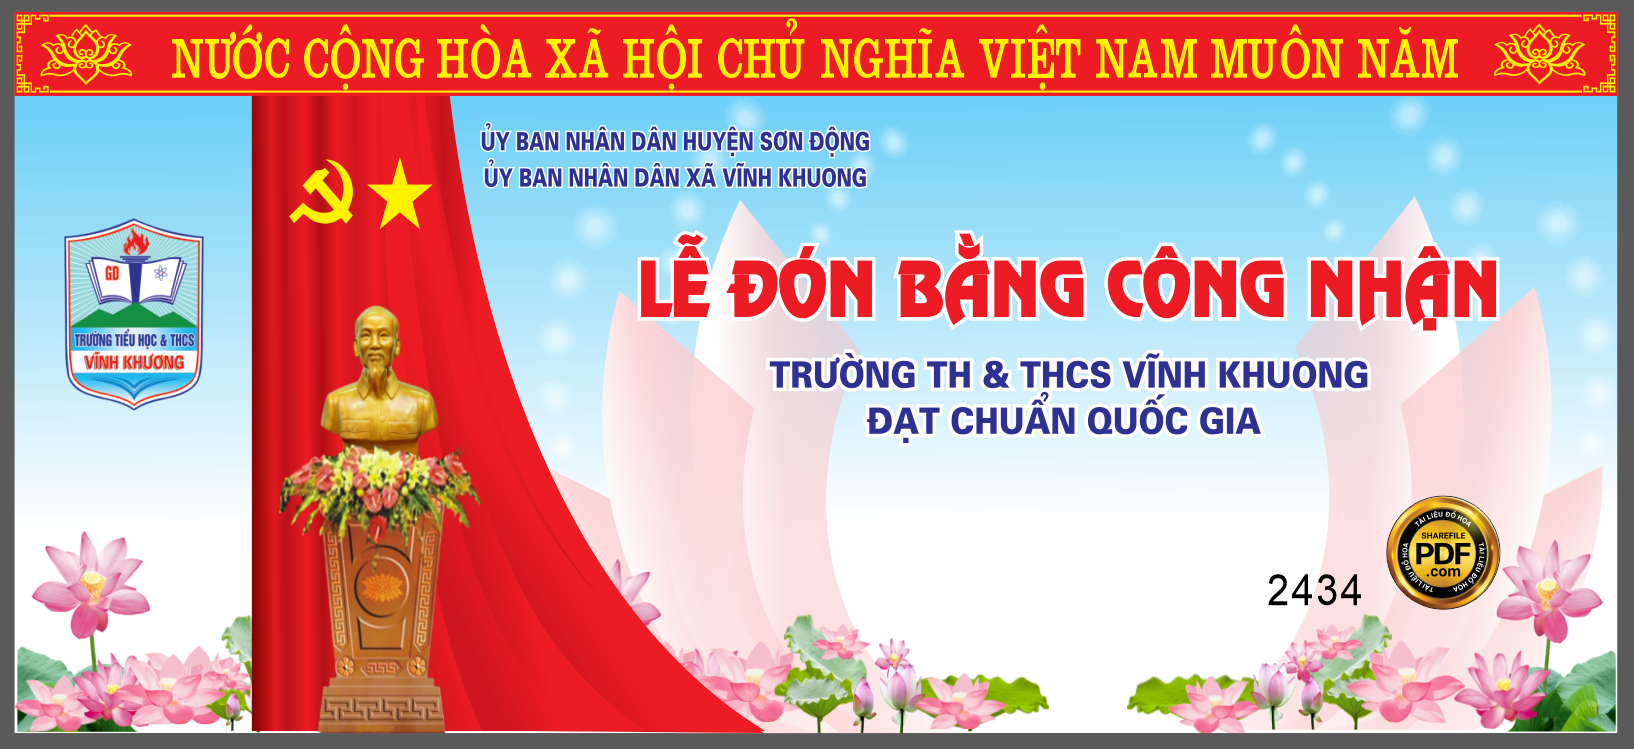 le don bang cong nhan truong chuan.png